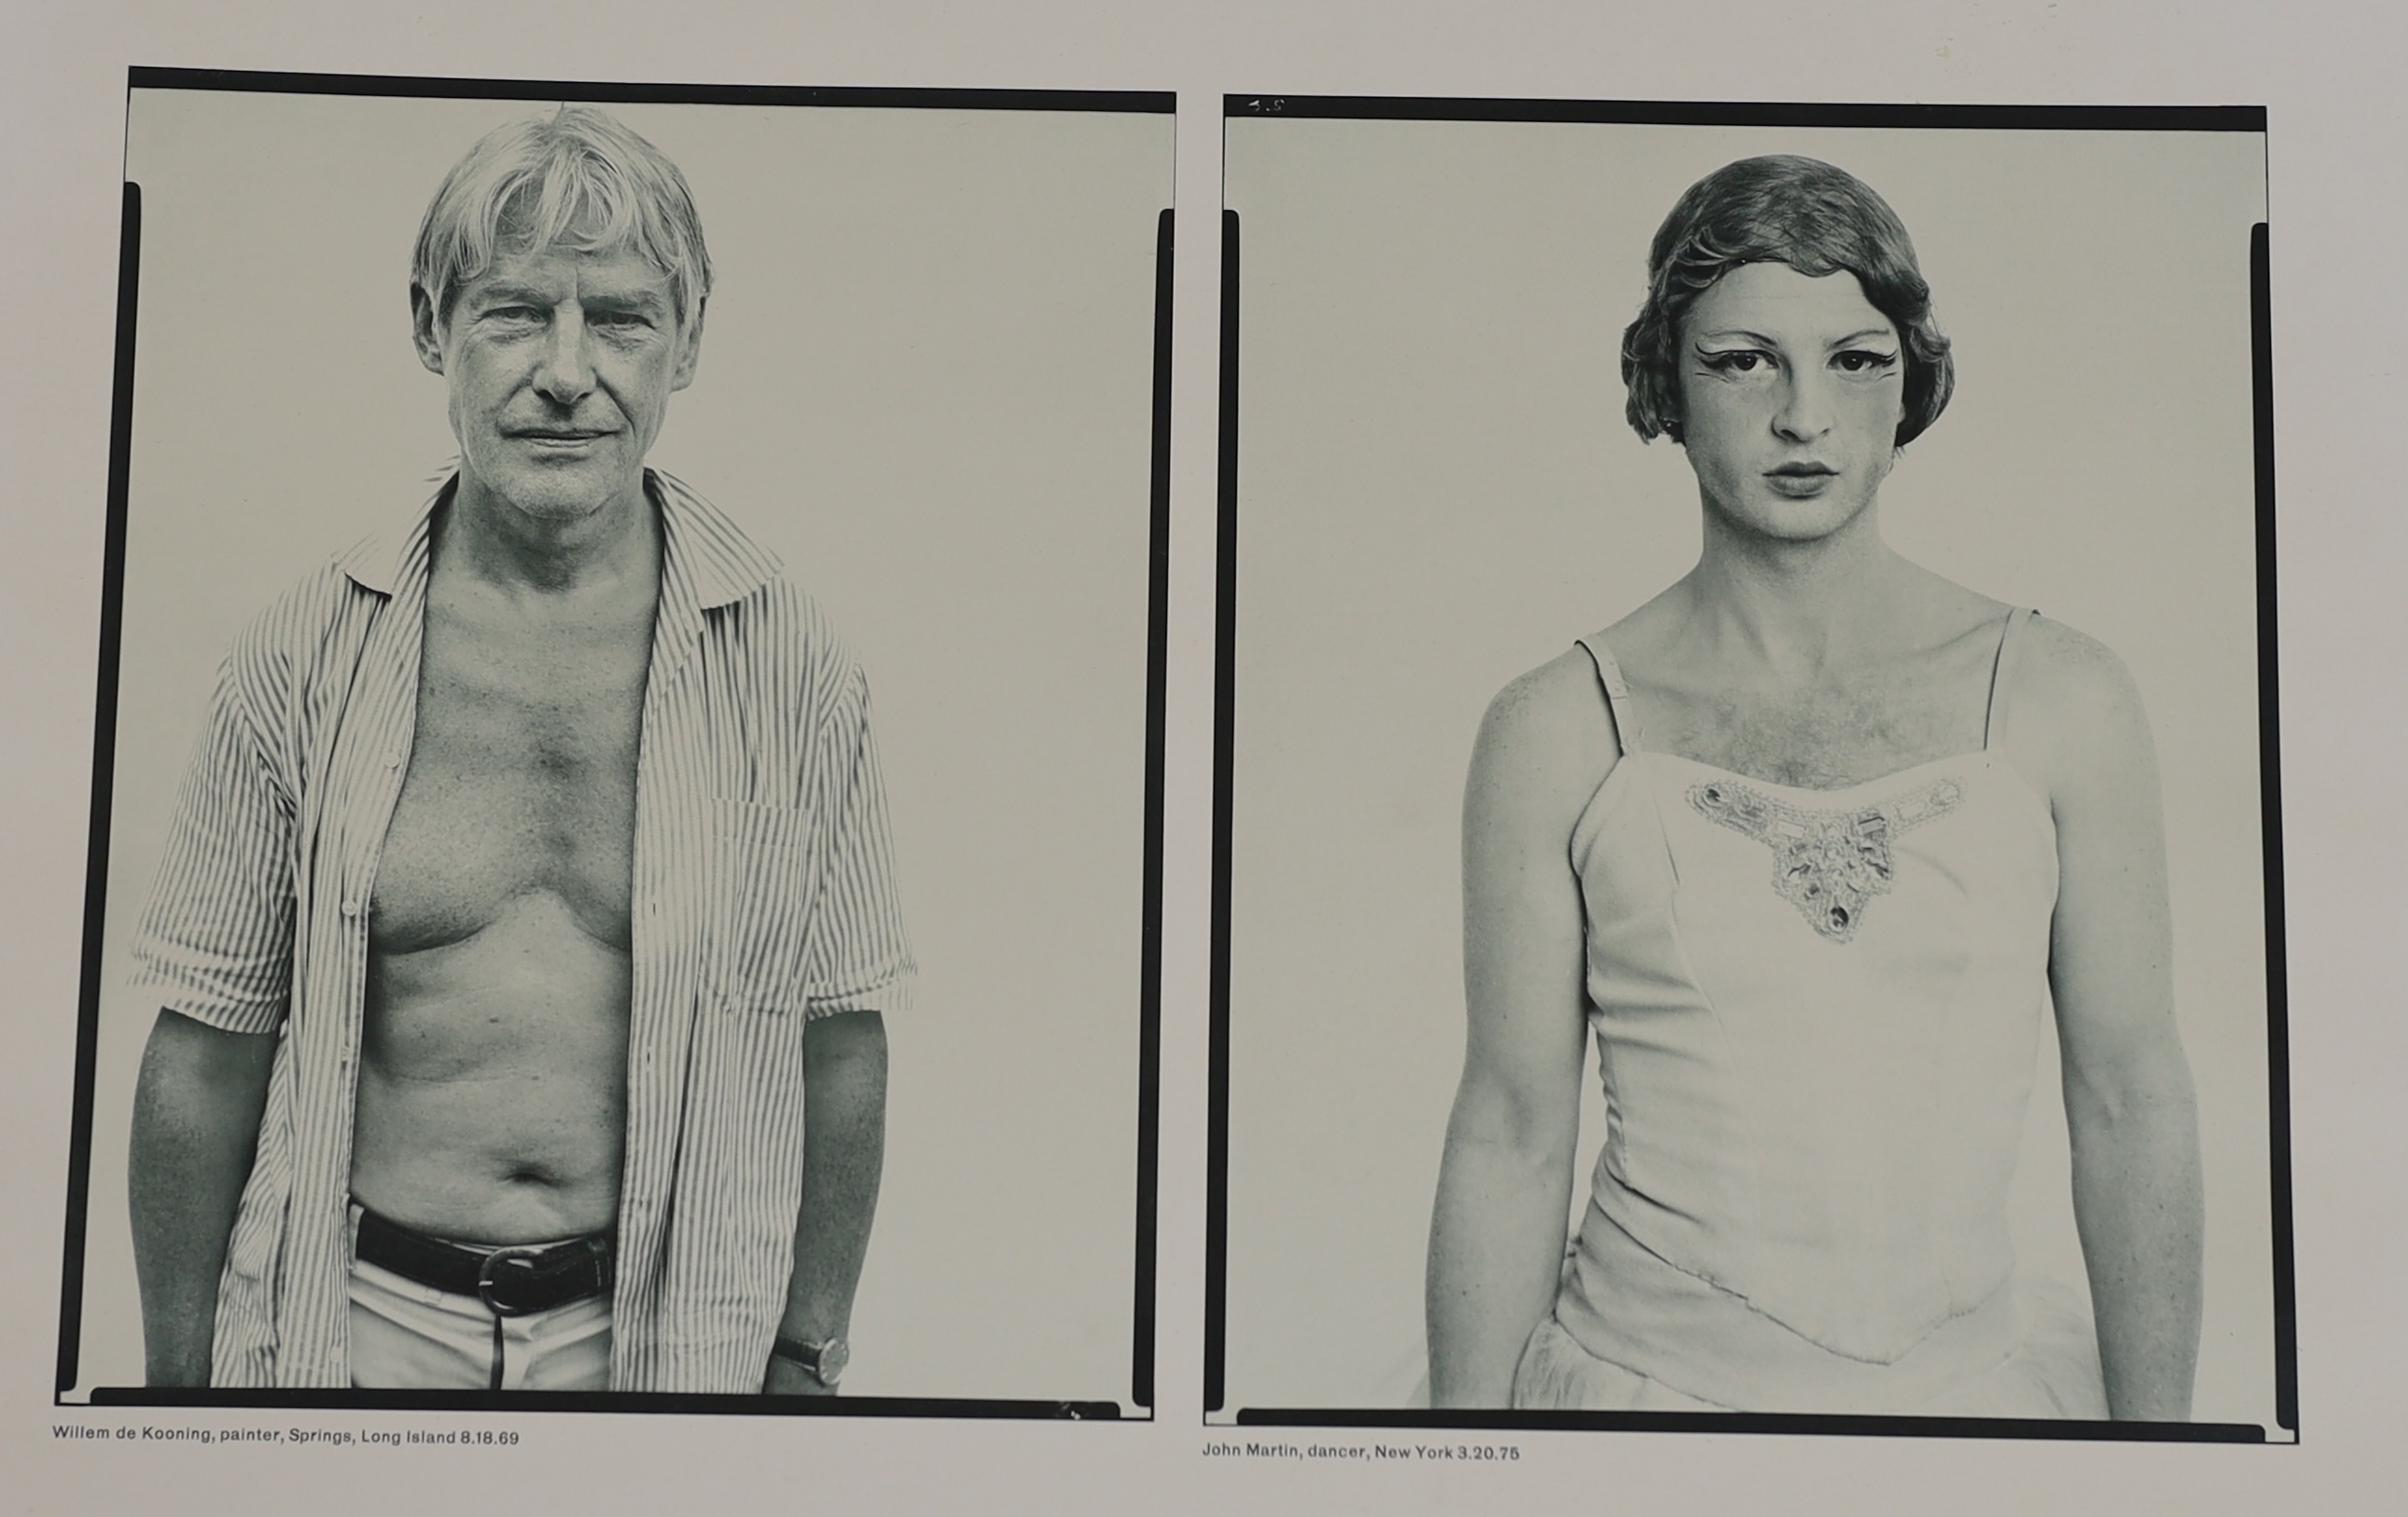 Richard Avedon (American, 1923-2004), 'Richard Avedon, Photographer, 1975 Marlborough Gallery New York', Exhibition poster, 66 x 59.5cm